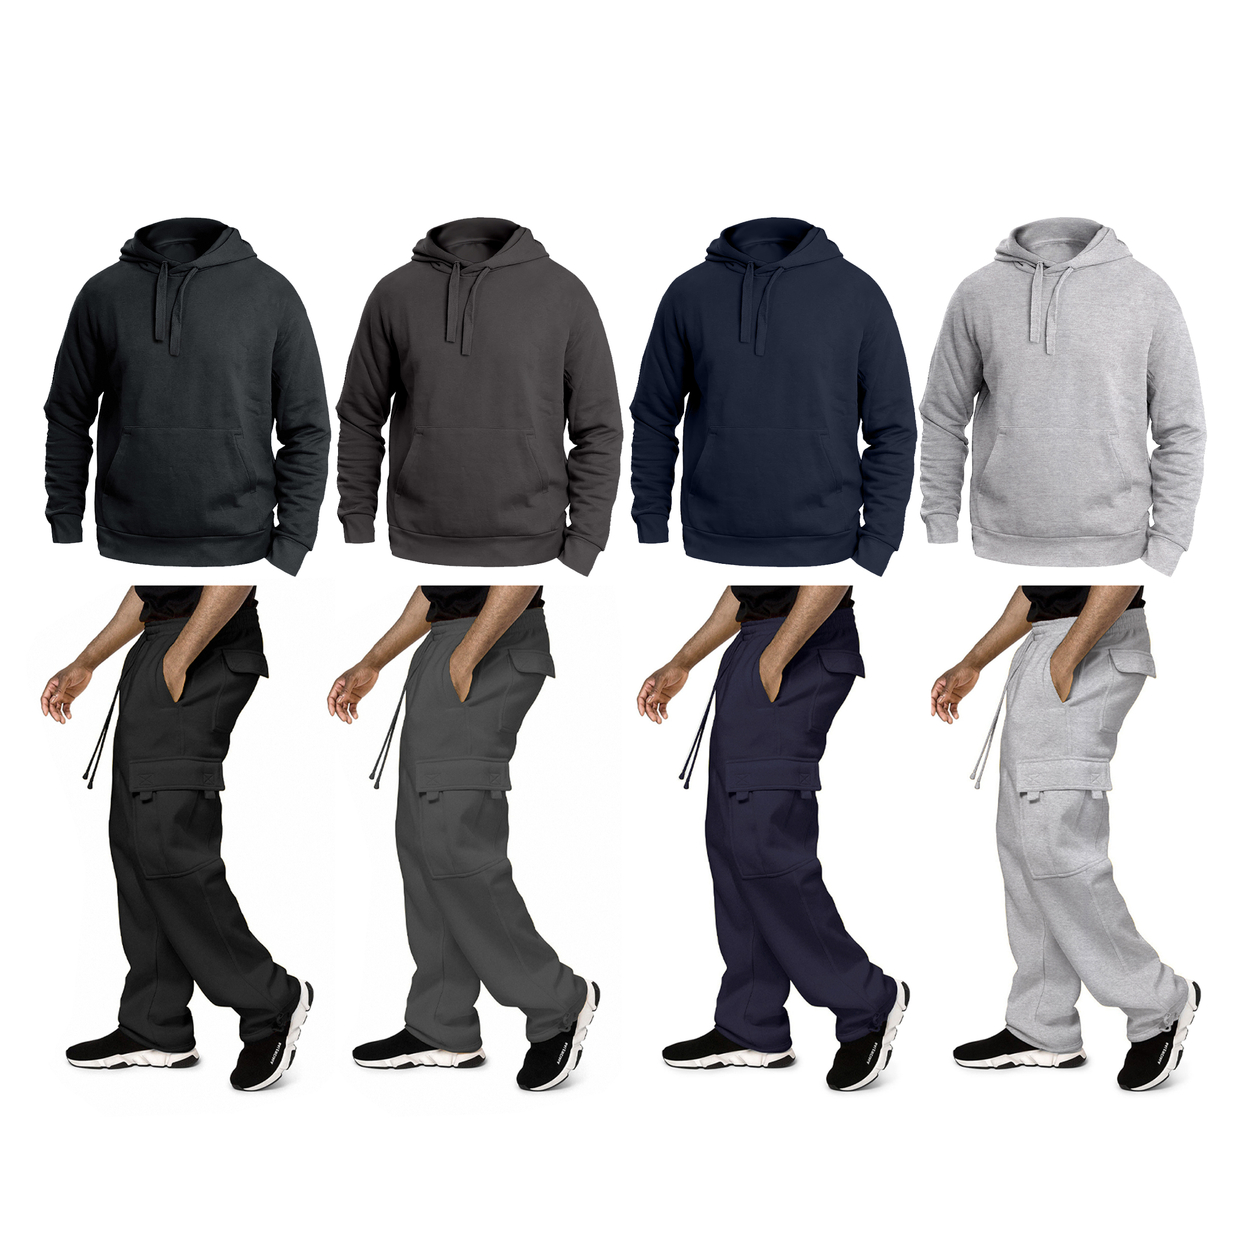 2-Pack: Men's Big & Tall Winter Warm Cozy Athletic Fleece Lined Multi-Pocket Cargo Sweatsuit - Grey, Xx-large